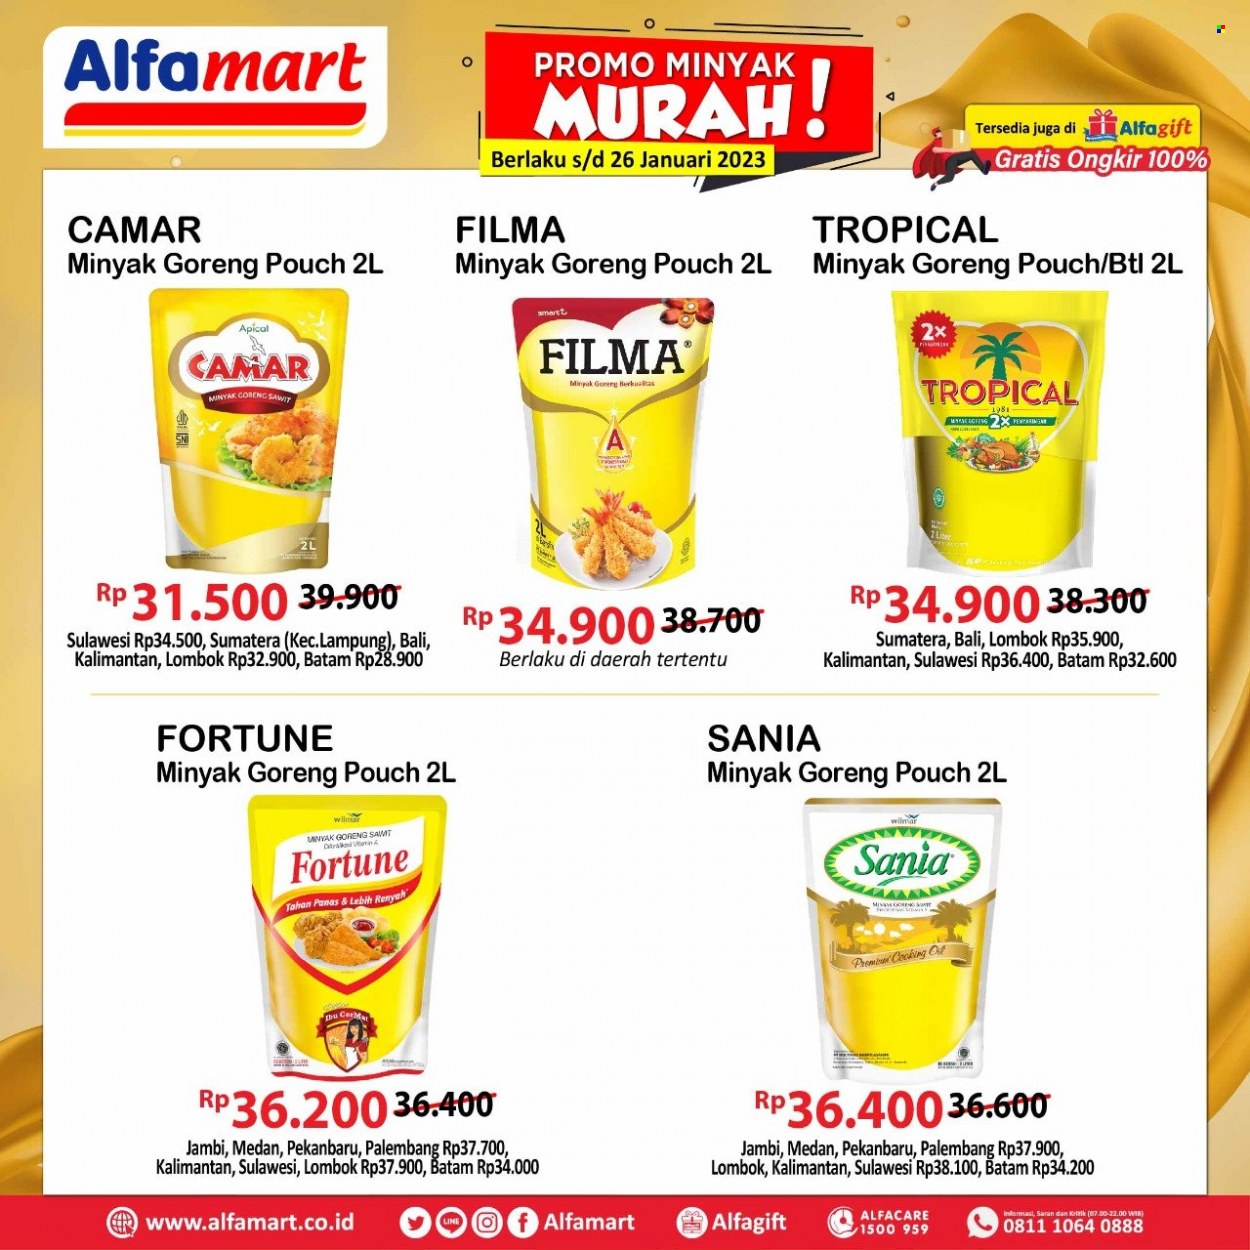 Promo Alfamart - 01/24/2023 - 01/26/2023 - Produk diskon - goreng, minyak, minyak goreng, minyak goreng pouch. Halaman 1.